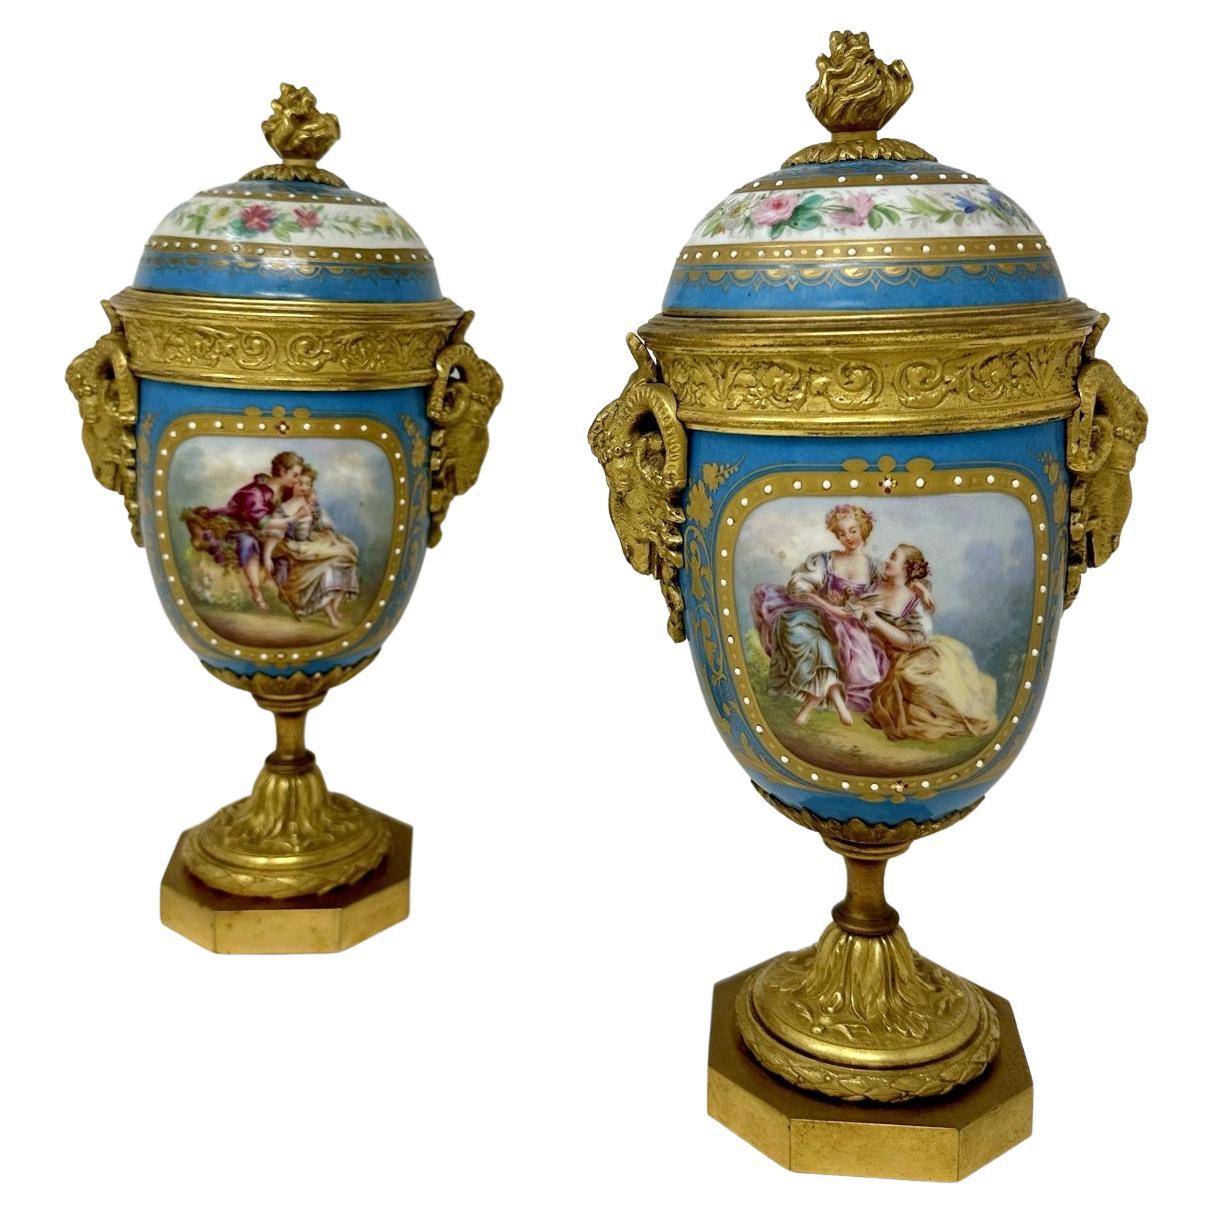 Antique Pair of French Sèvres Porcelain Ormolu Mounted Urns Vases Centerpiece